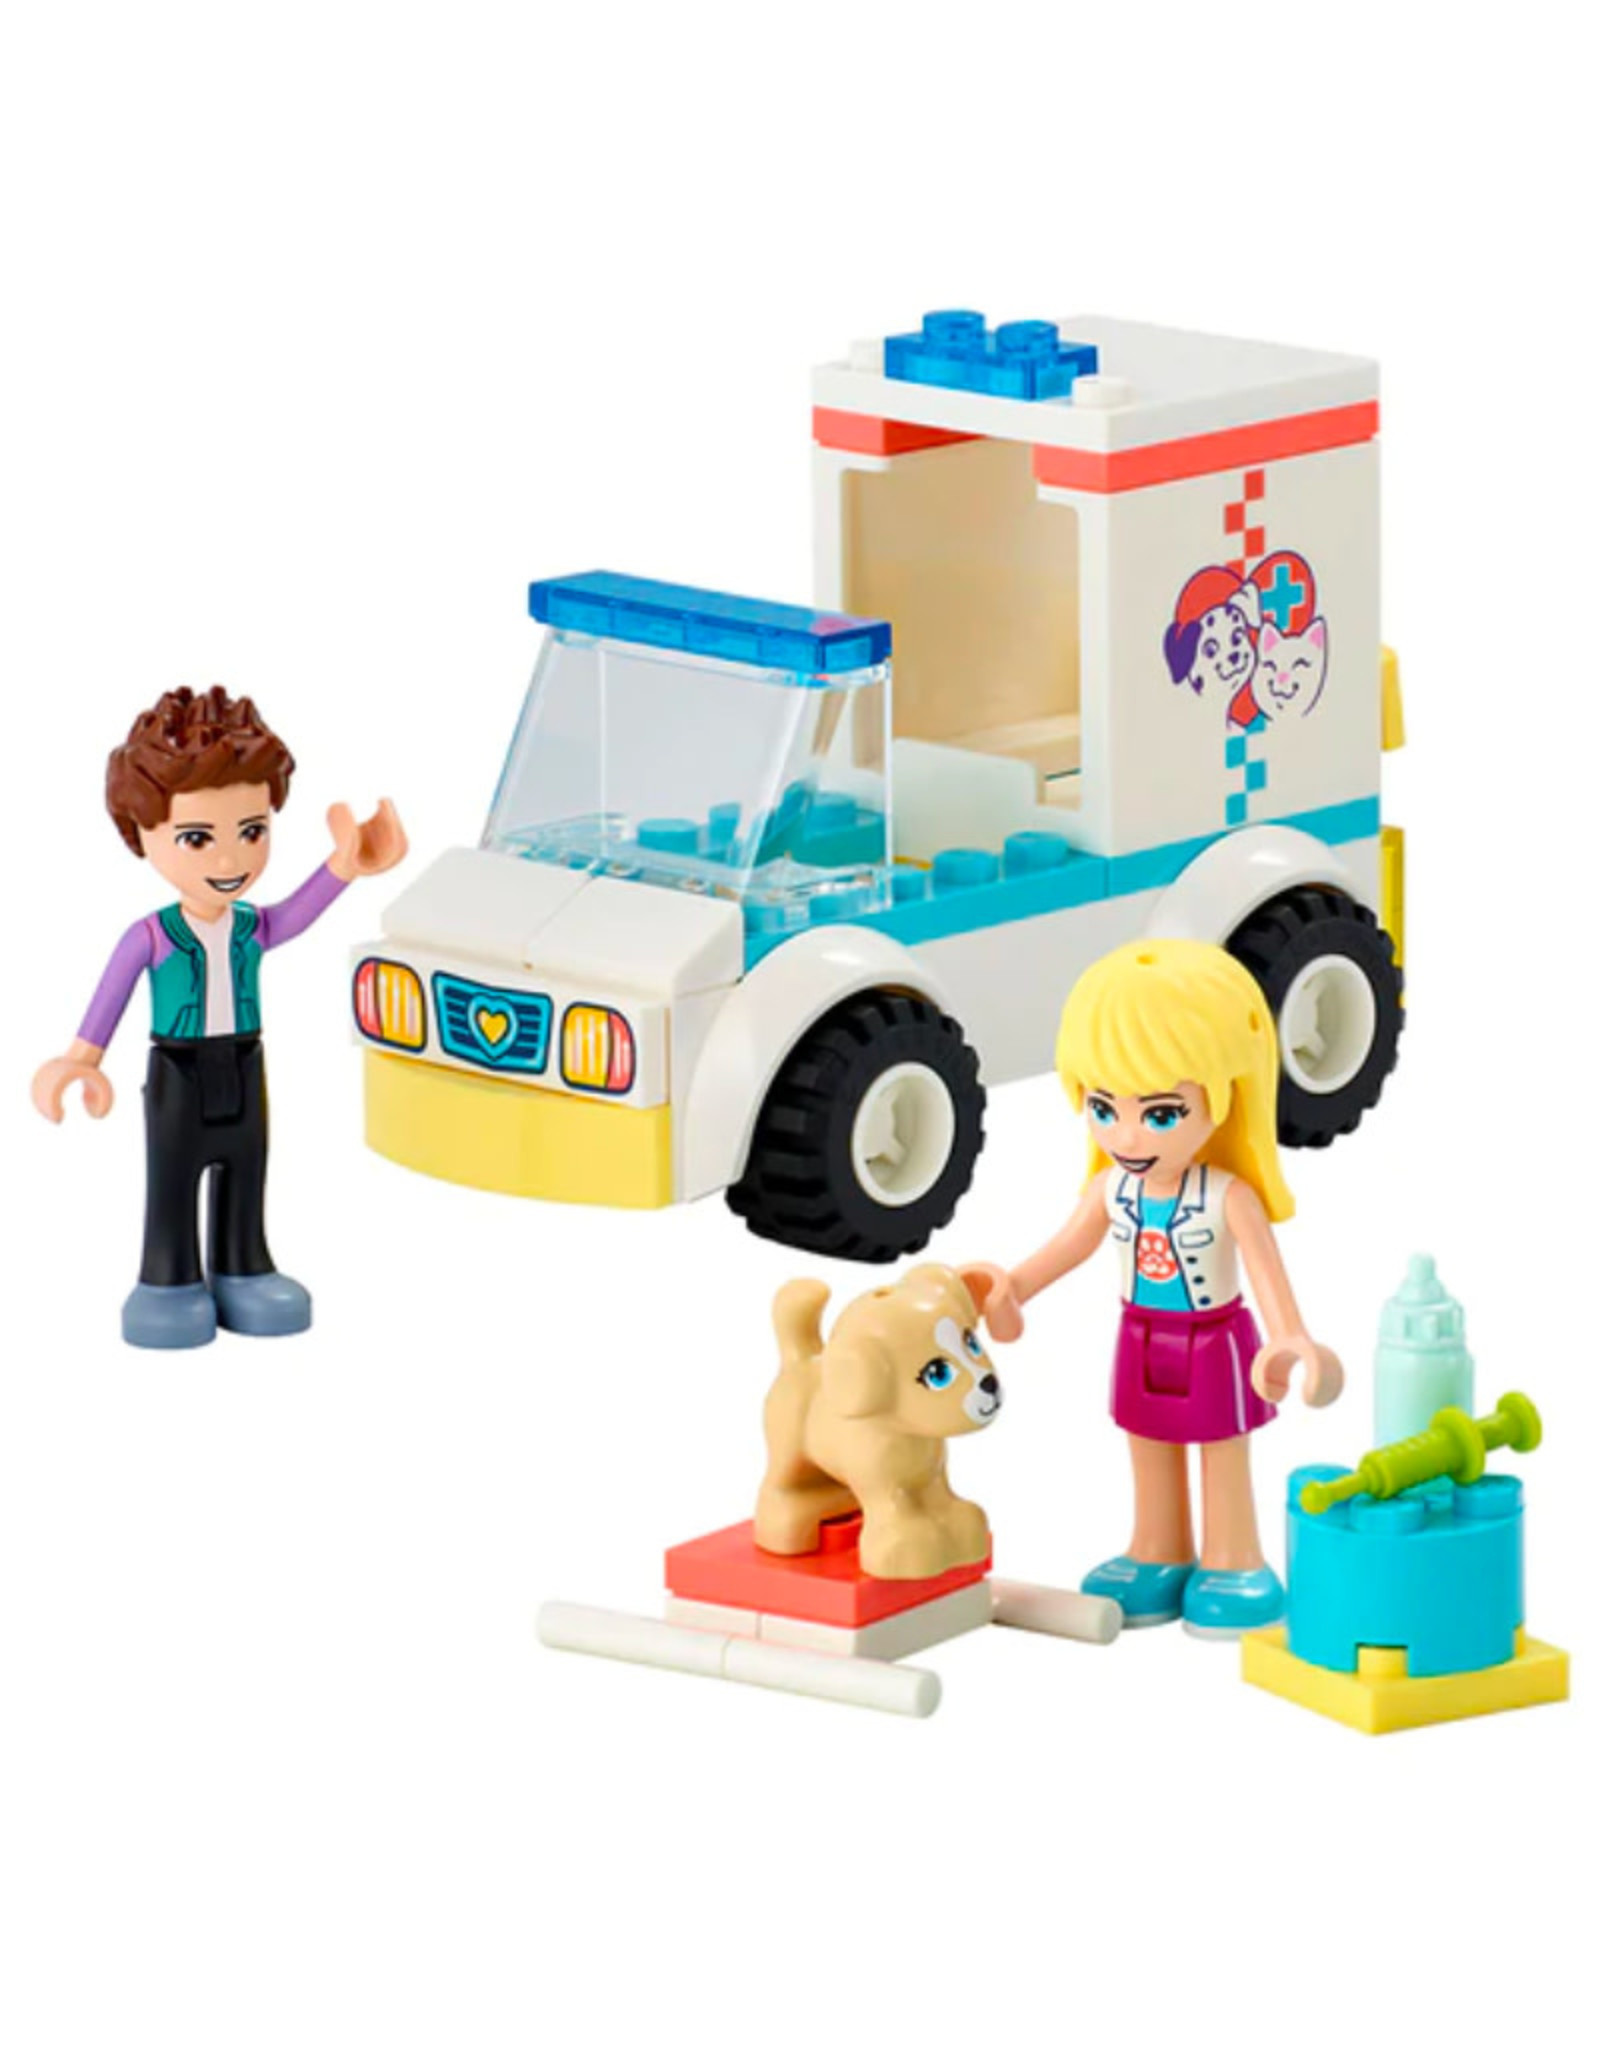 LEGO Friends 41694 Pet Clinic Ambulance